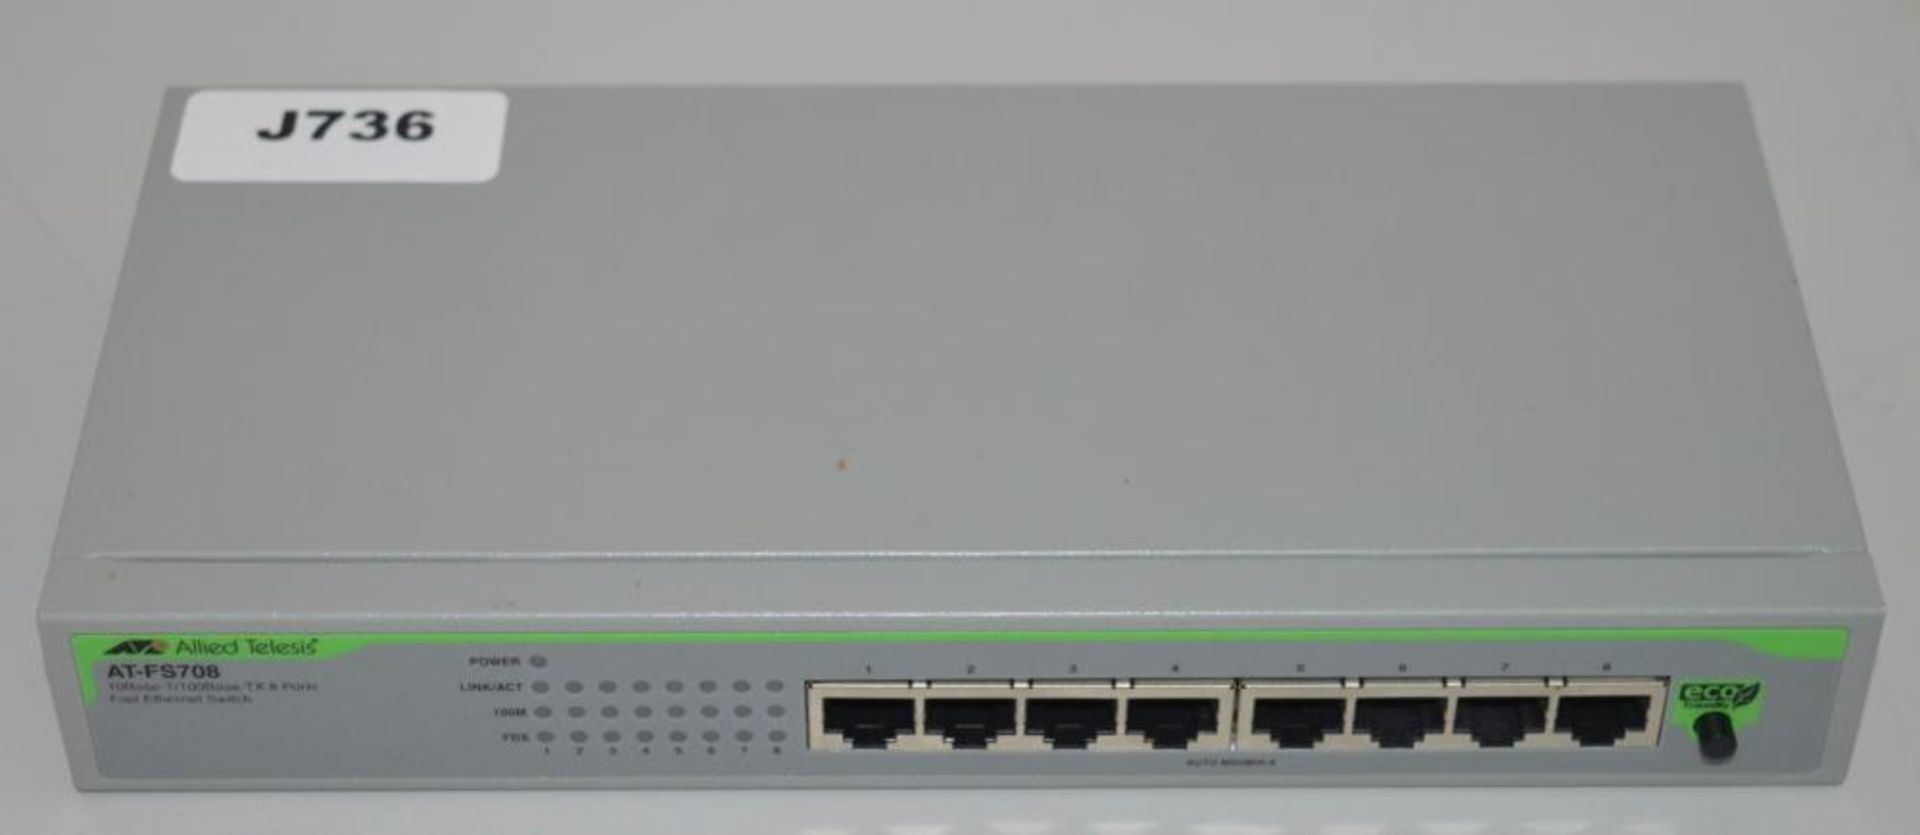 1 x Allied Telesis AT-FS708 Unmanaged Ethernet Switch - CL285 - Ref J736 - Location: Altrincham WA14